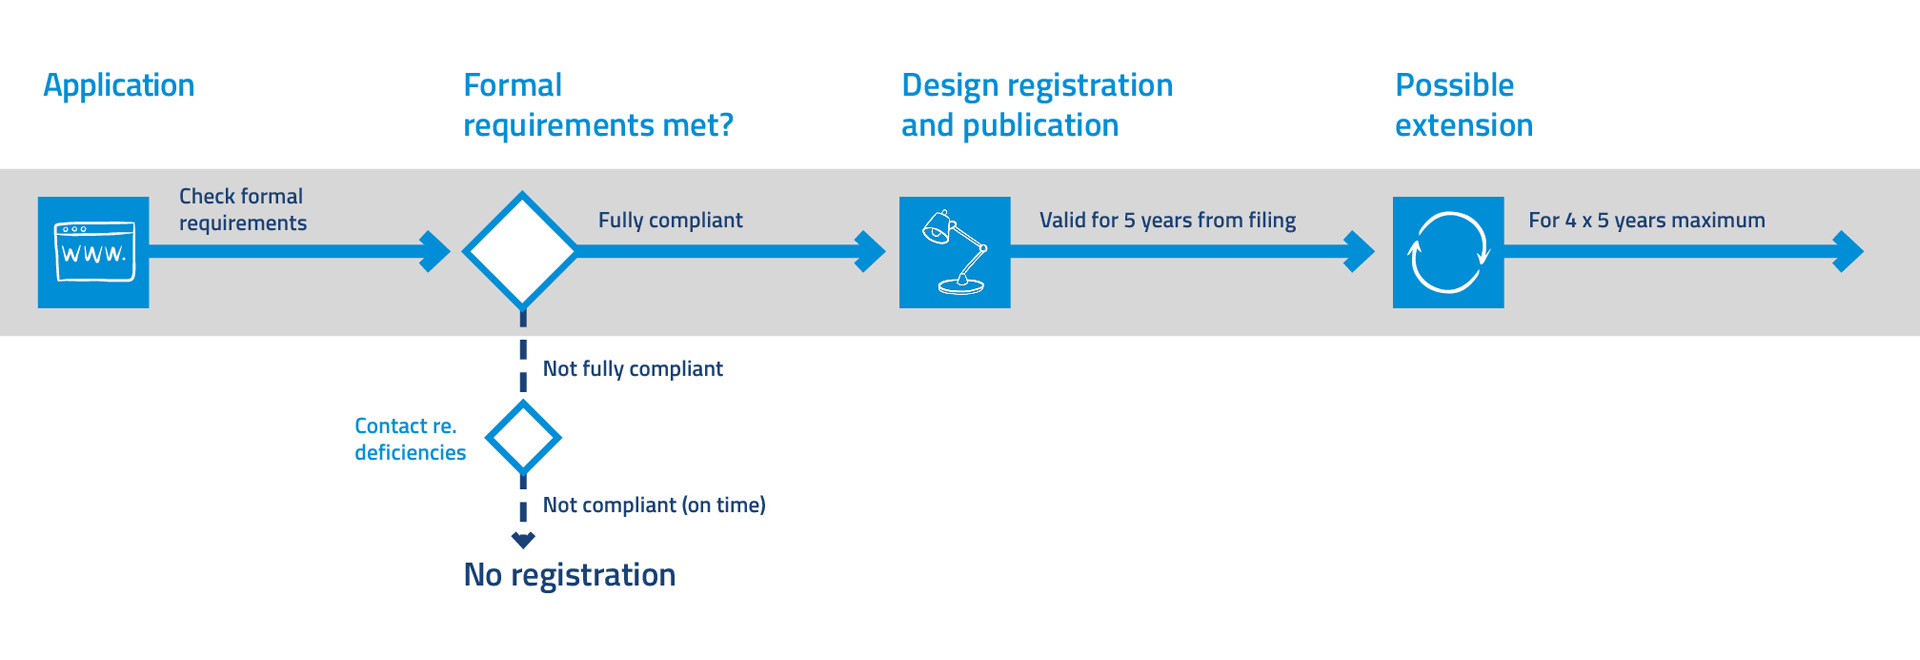 Design registration procedure